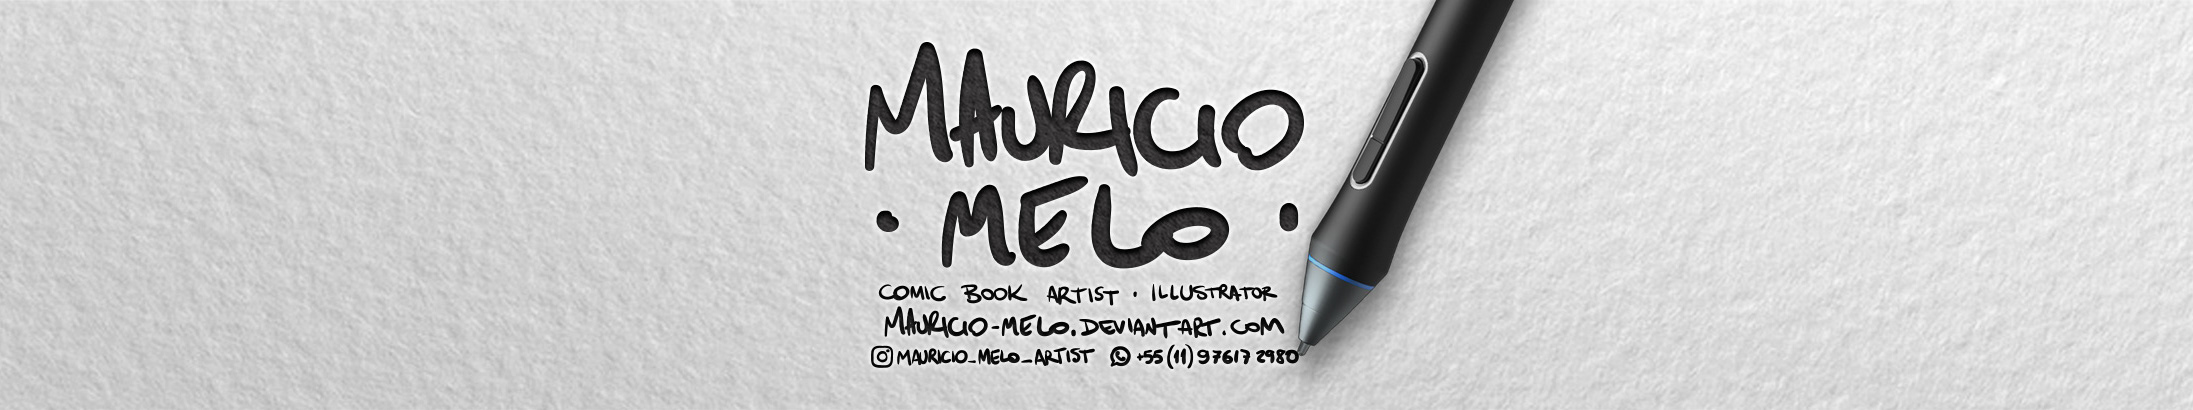 Mauricio Melo's profile banner